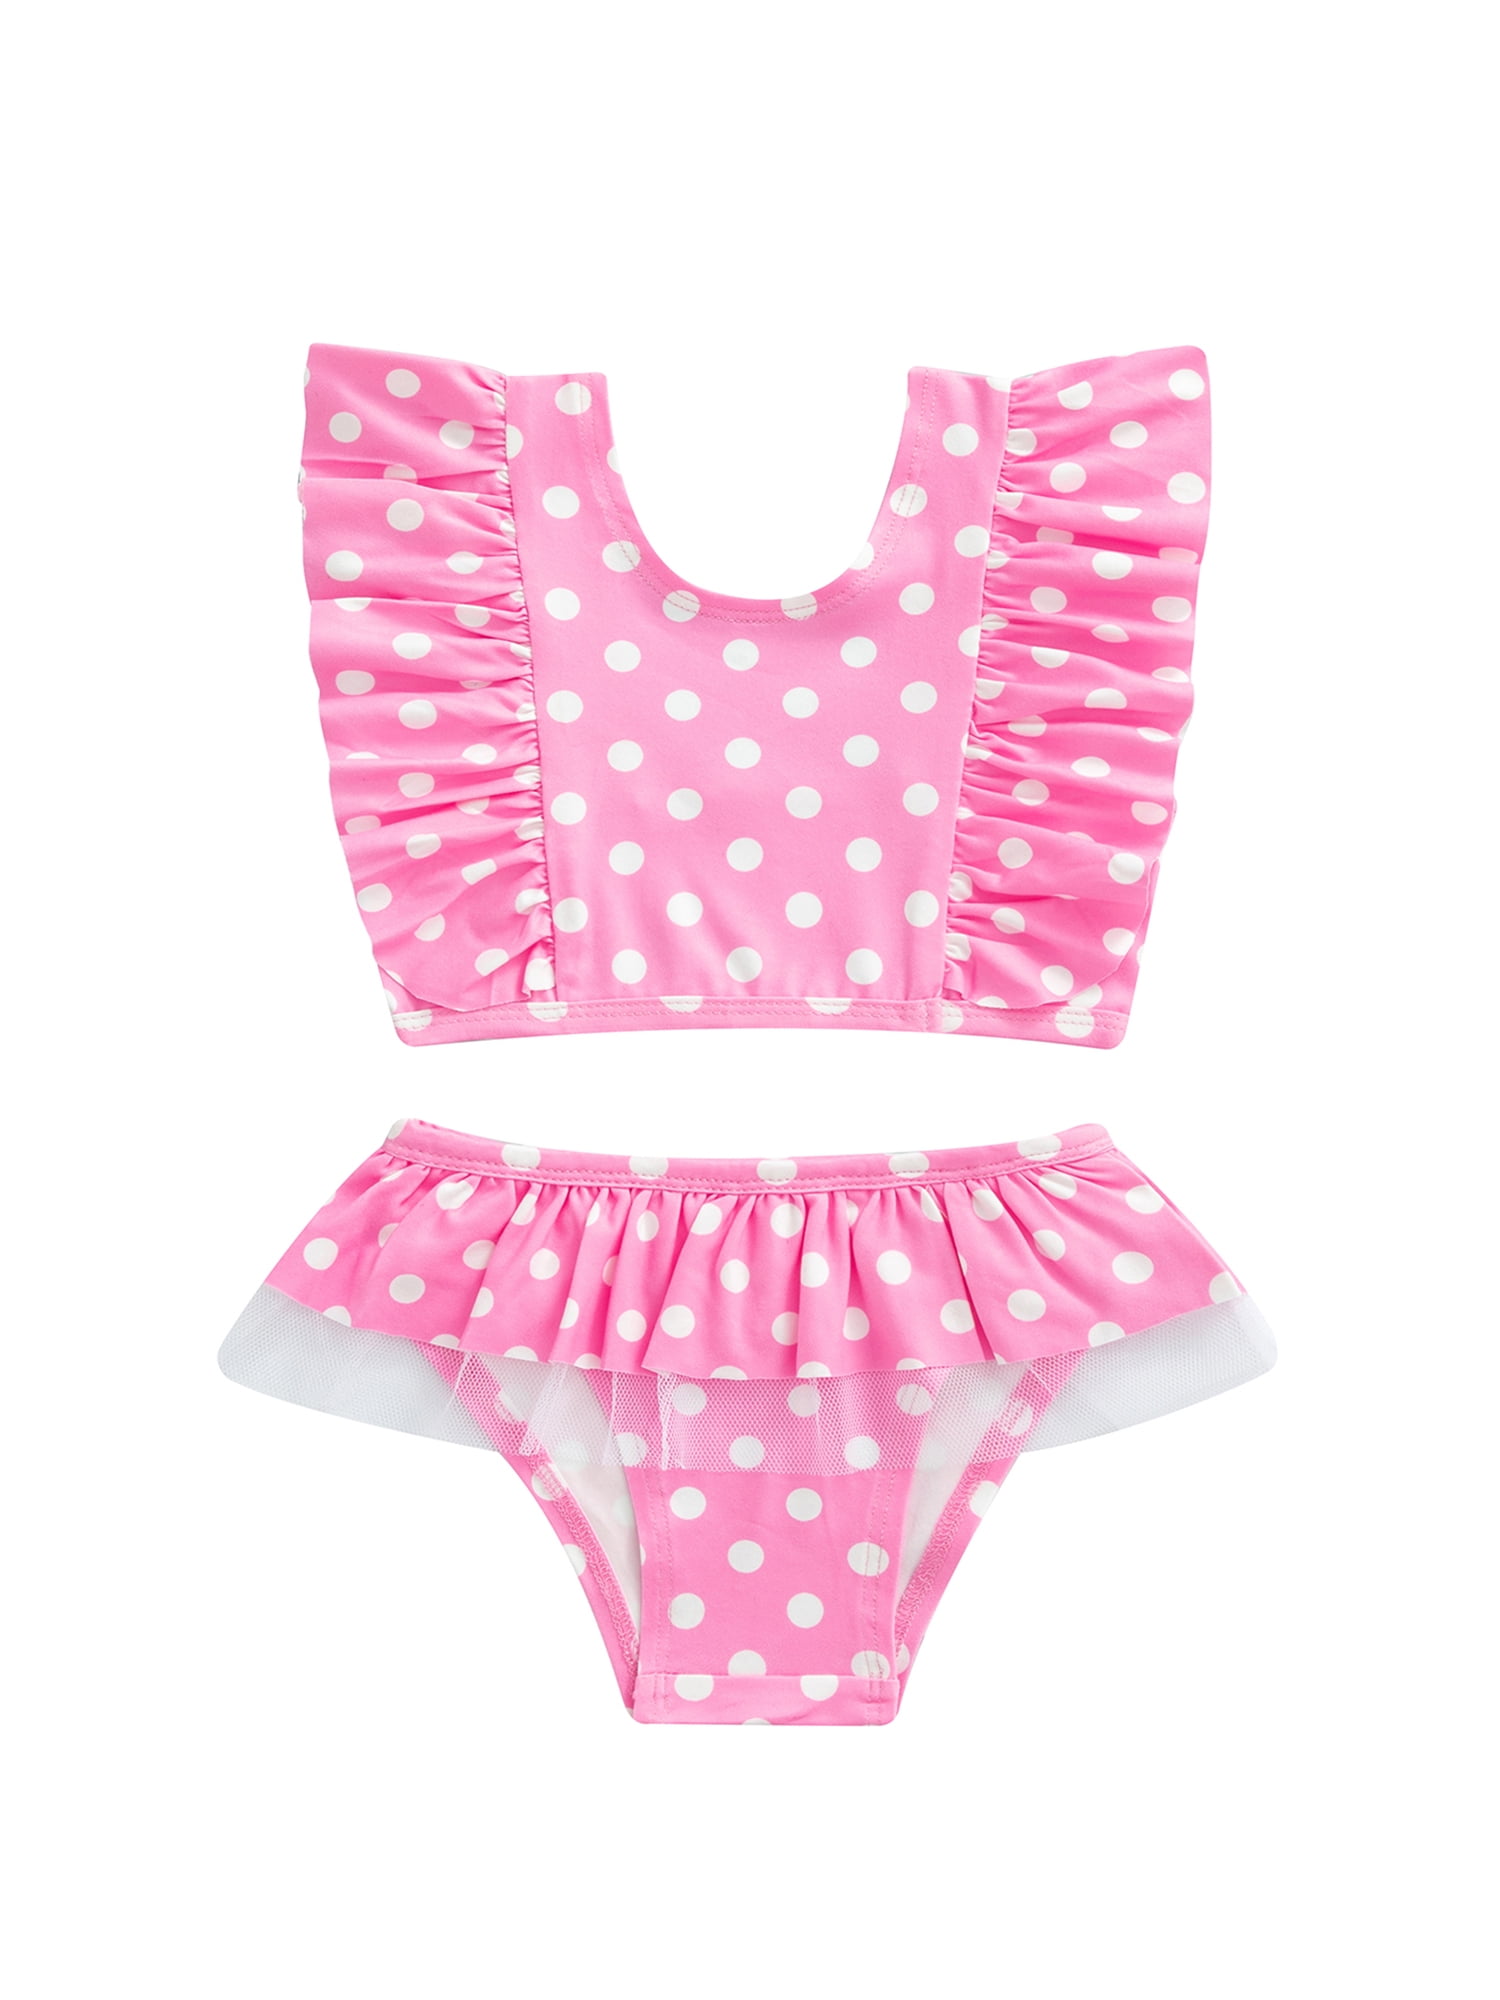 Genuiskids Toddler Baby Girl Swimsuit 2 Piece Bathing Suit Flutter ...